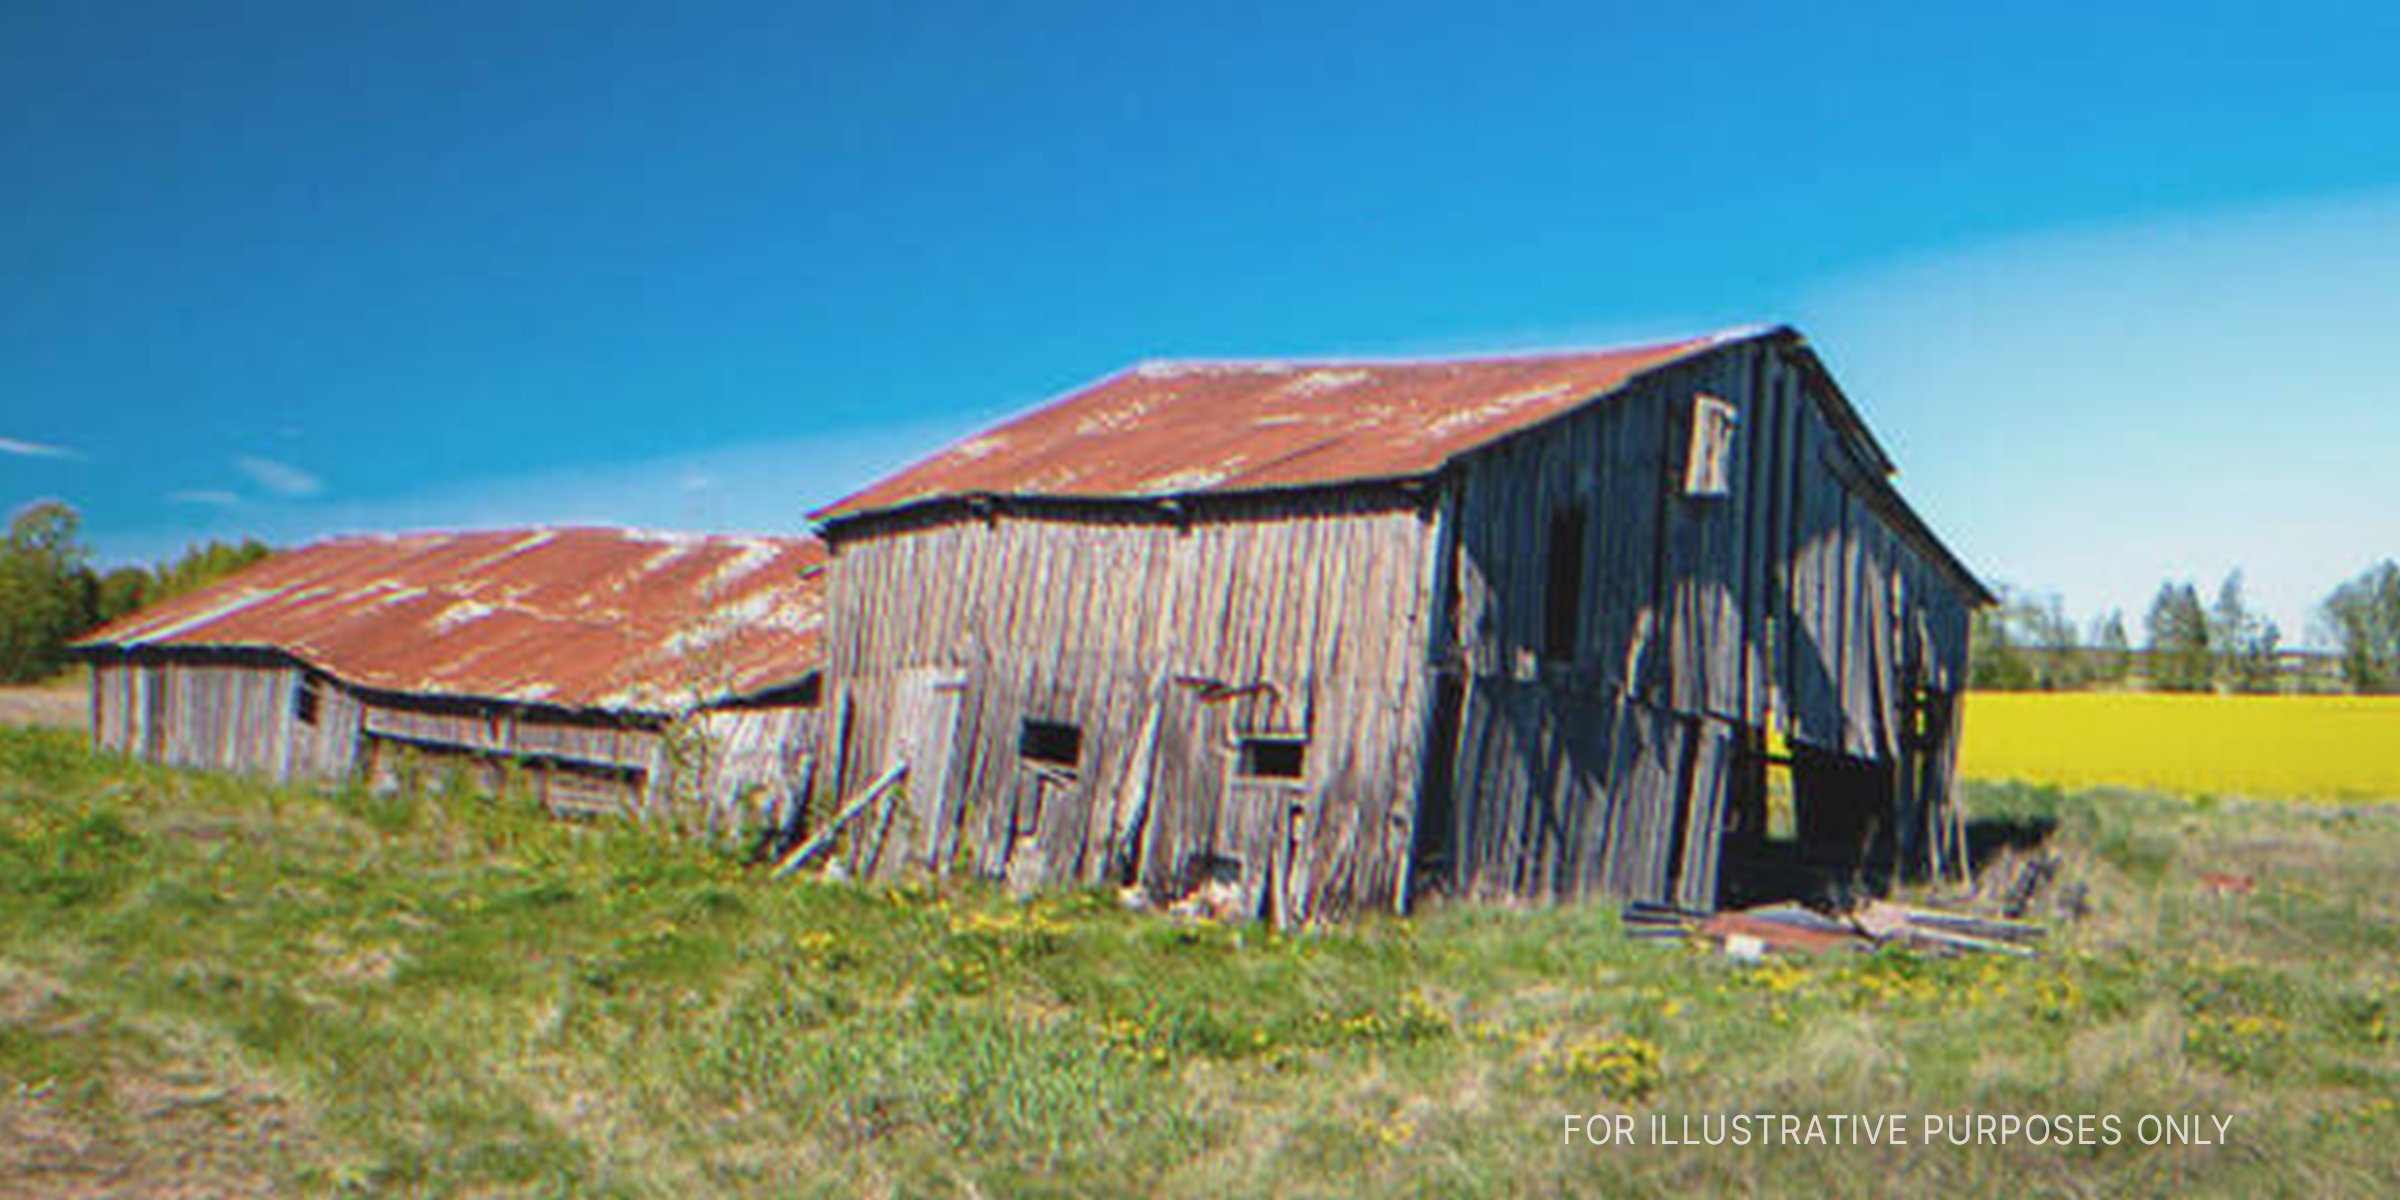 Old barn | Source: Shutterstock